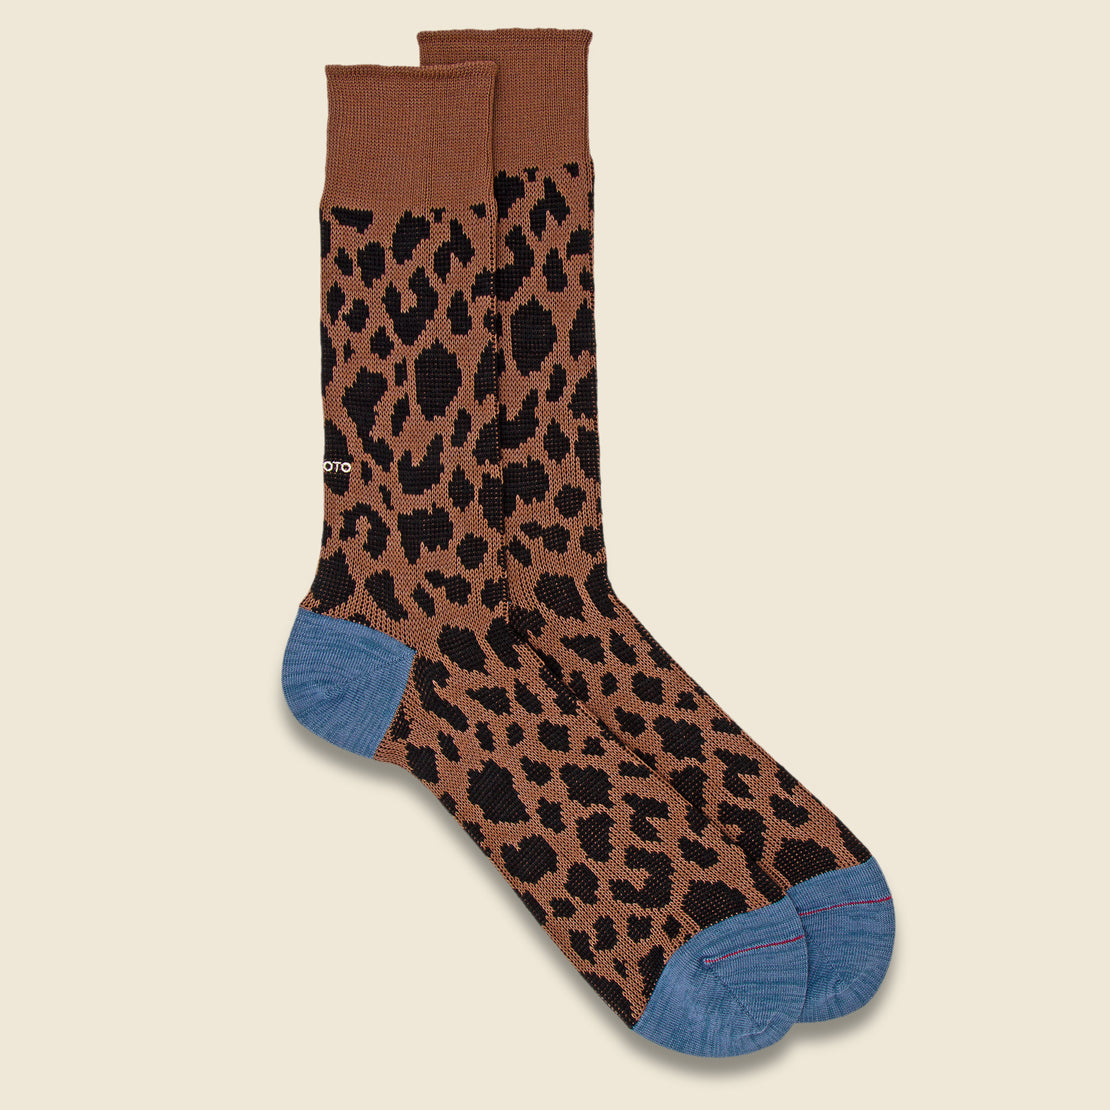 RoToTo Leopard Print Sock - Brown/Light Blue